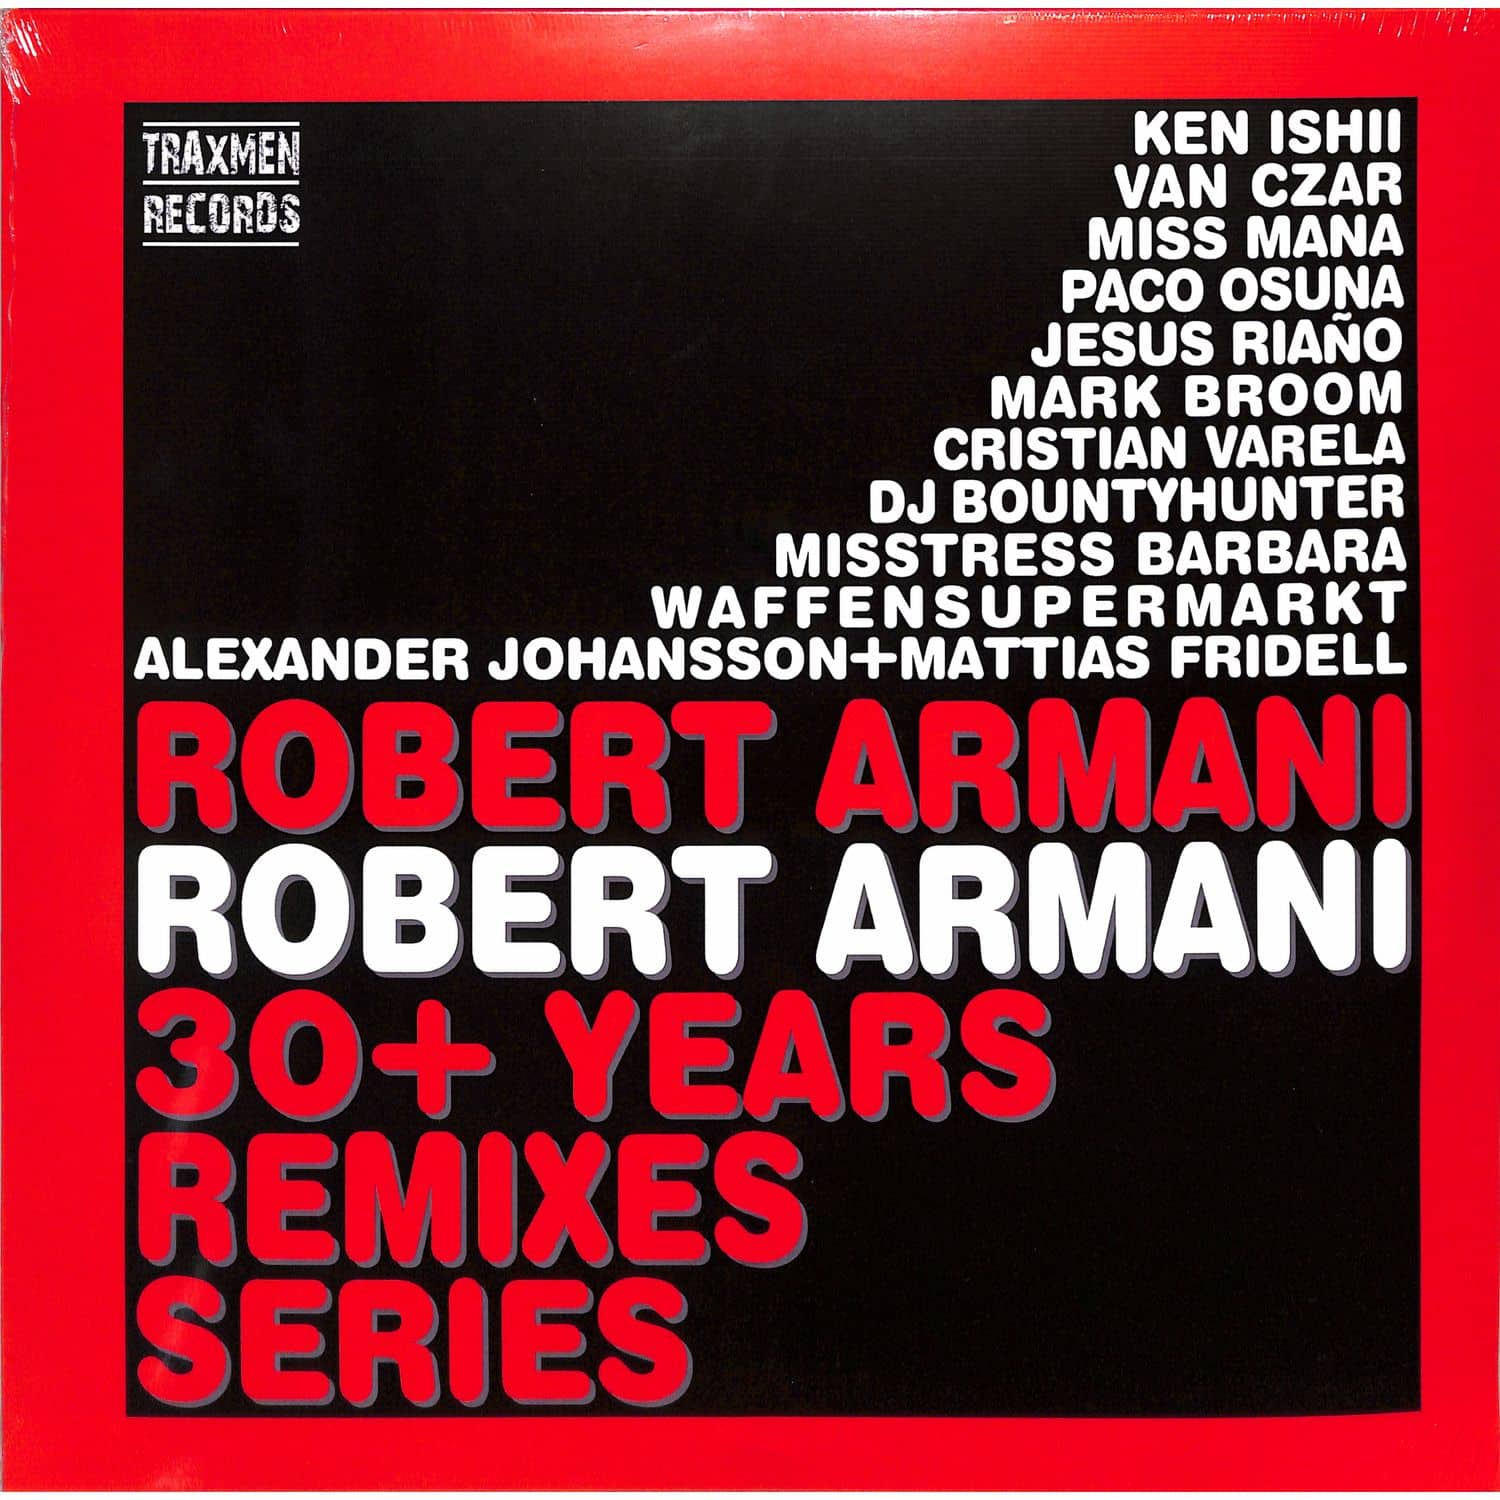 Robert Armani - ROBERT ARMANI 30+ YEARS REMIXES SERIES 